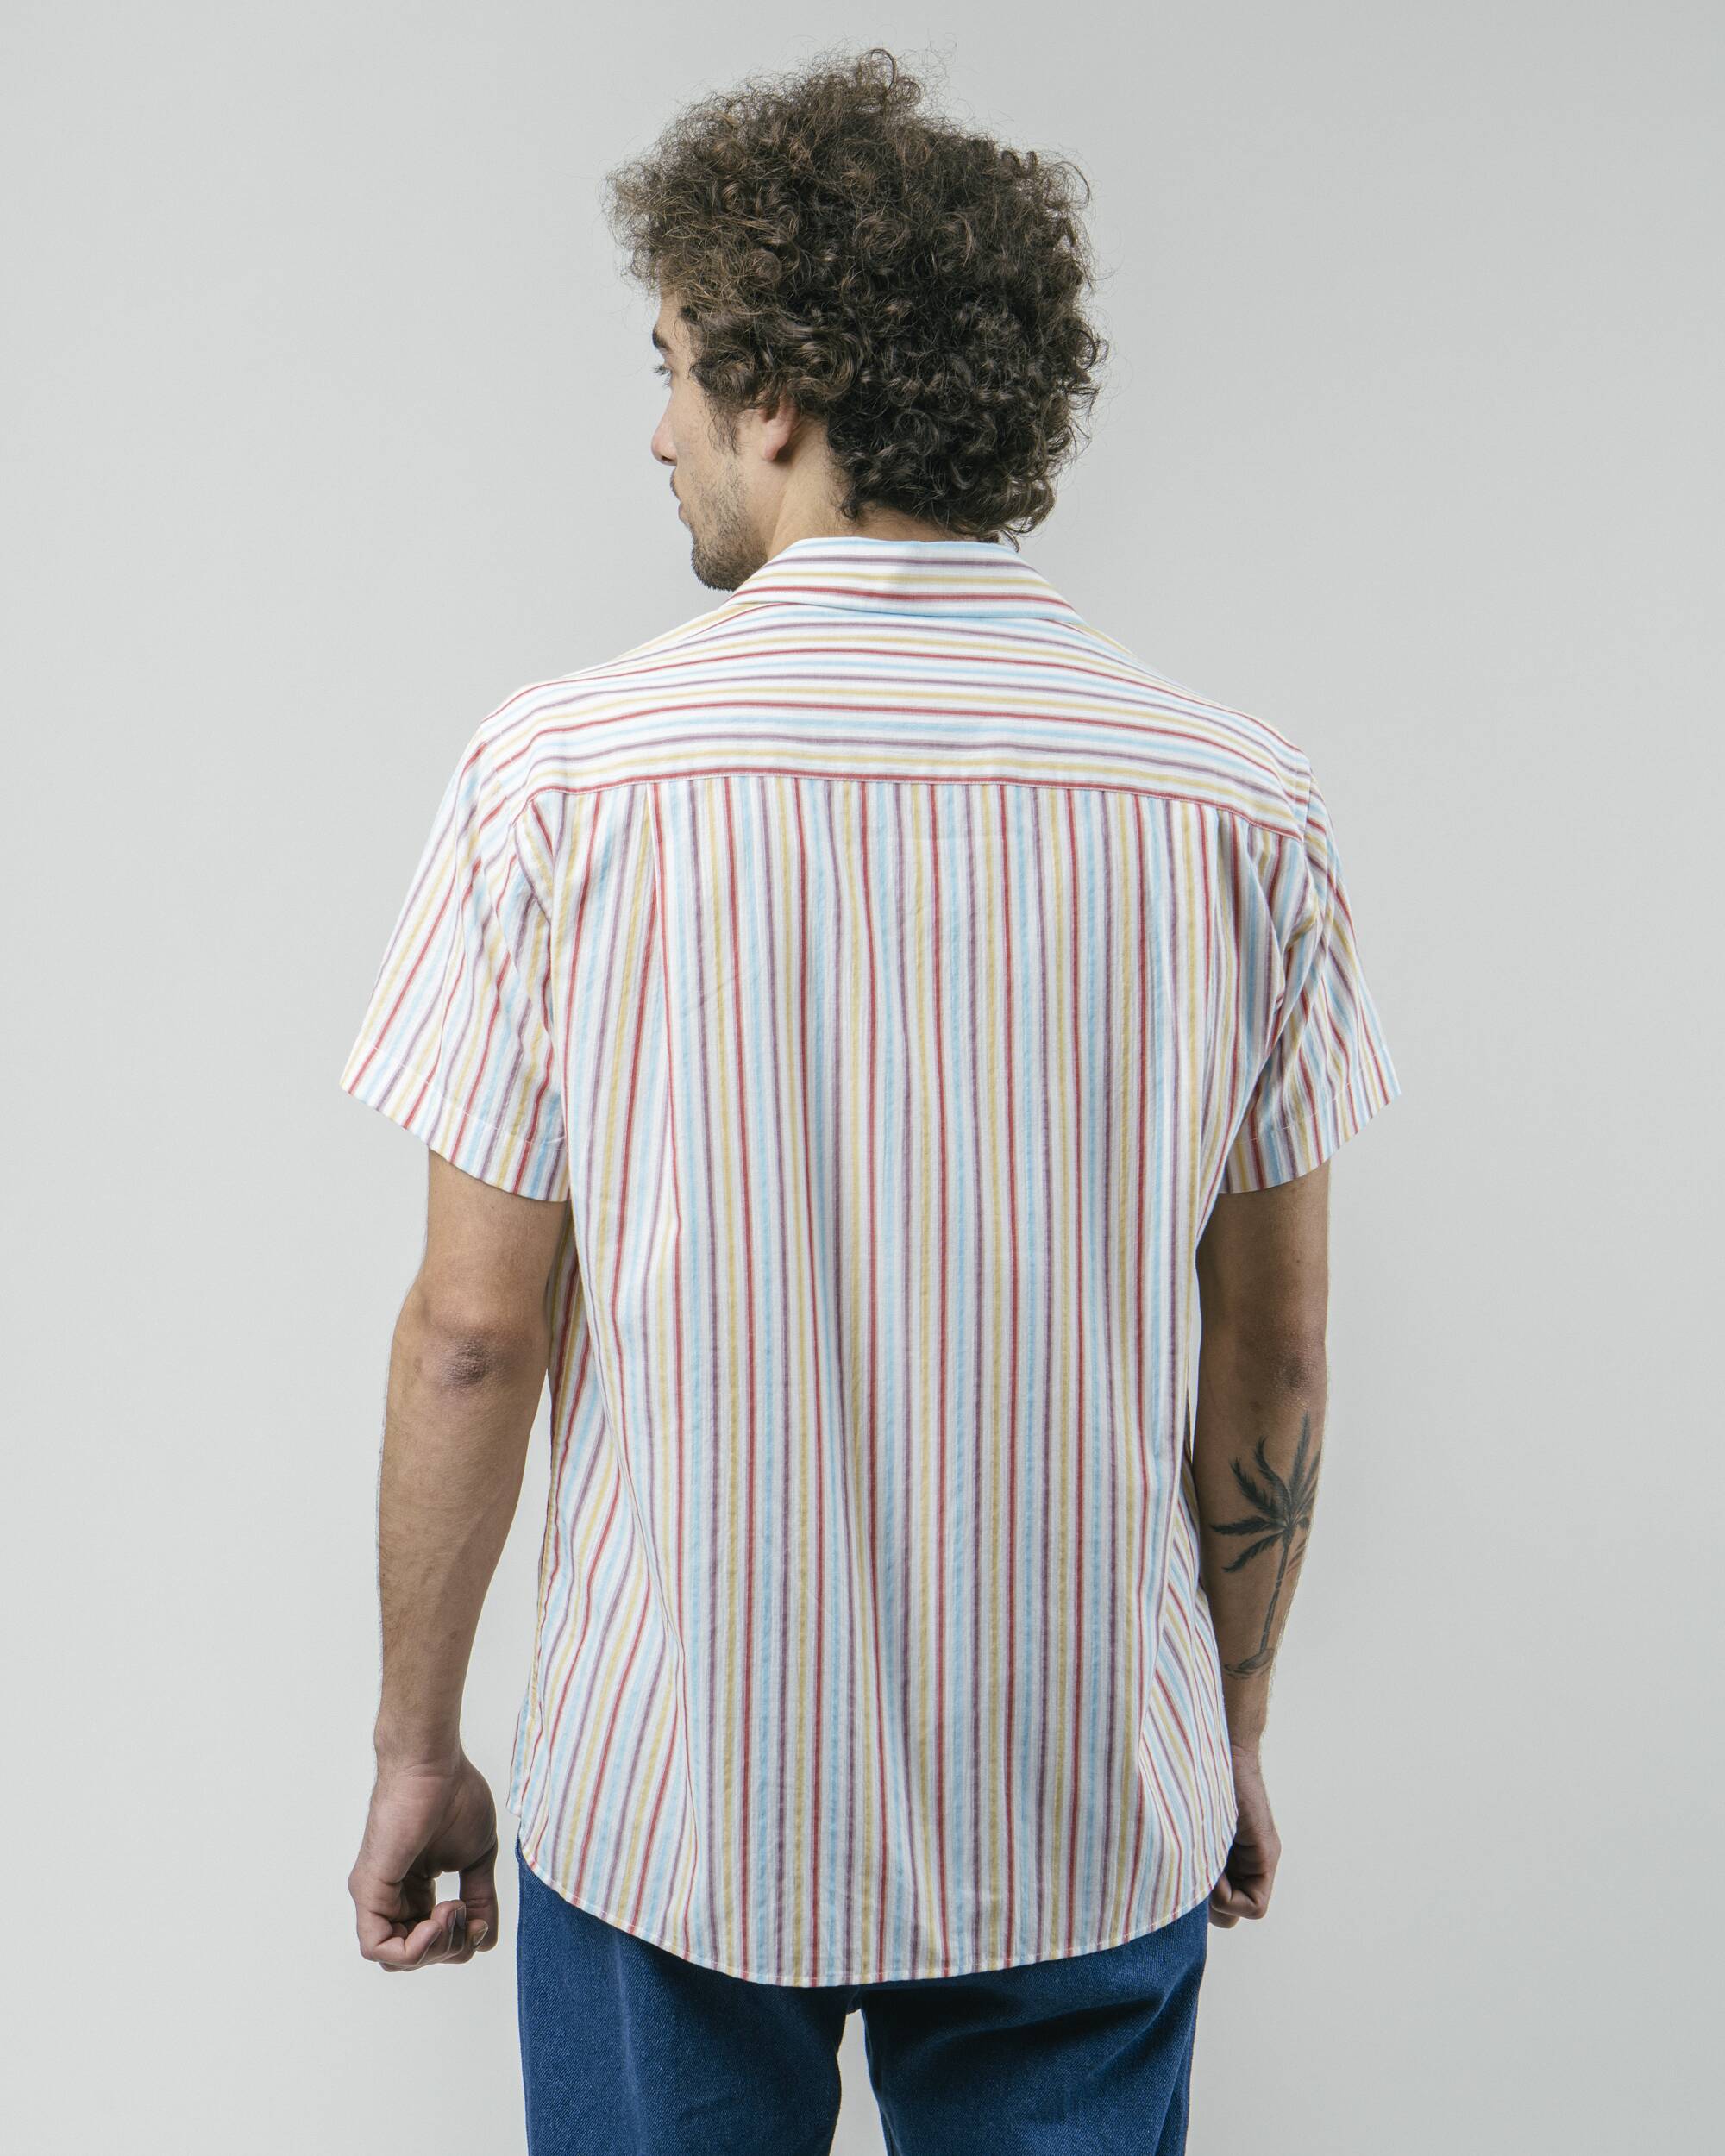 Hawaiian shirt "Downtown Stripes" made from 100% organic cotton from Brava Fabrics